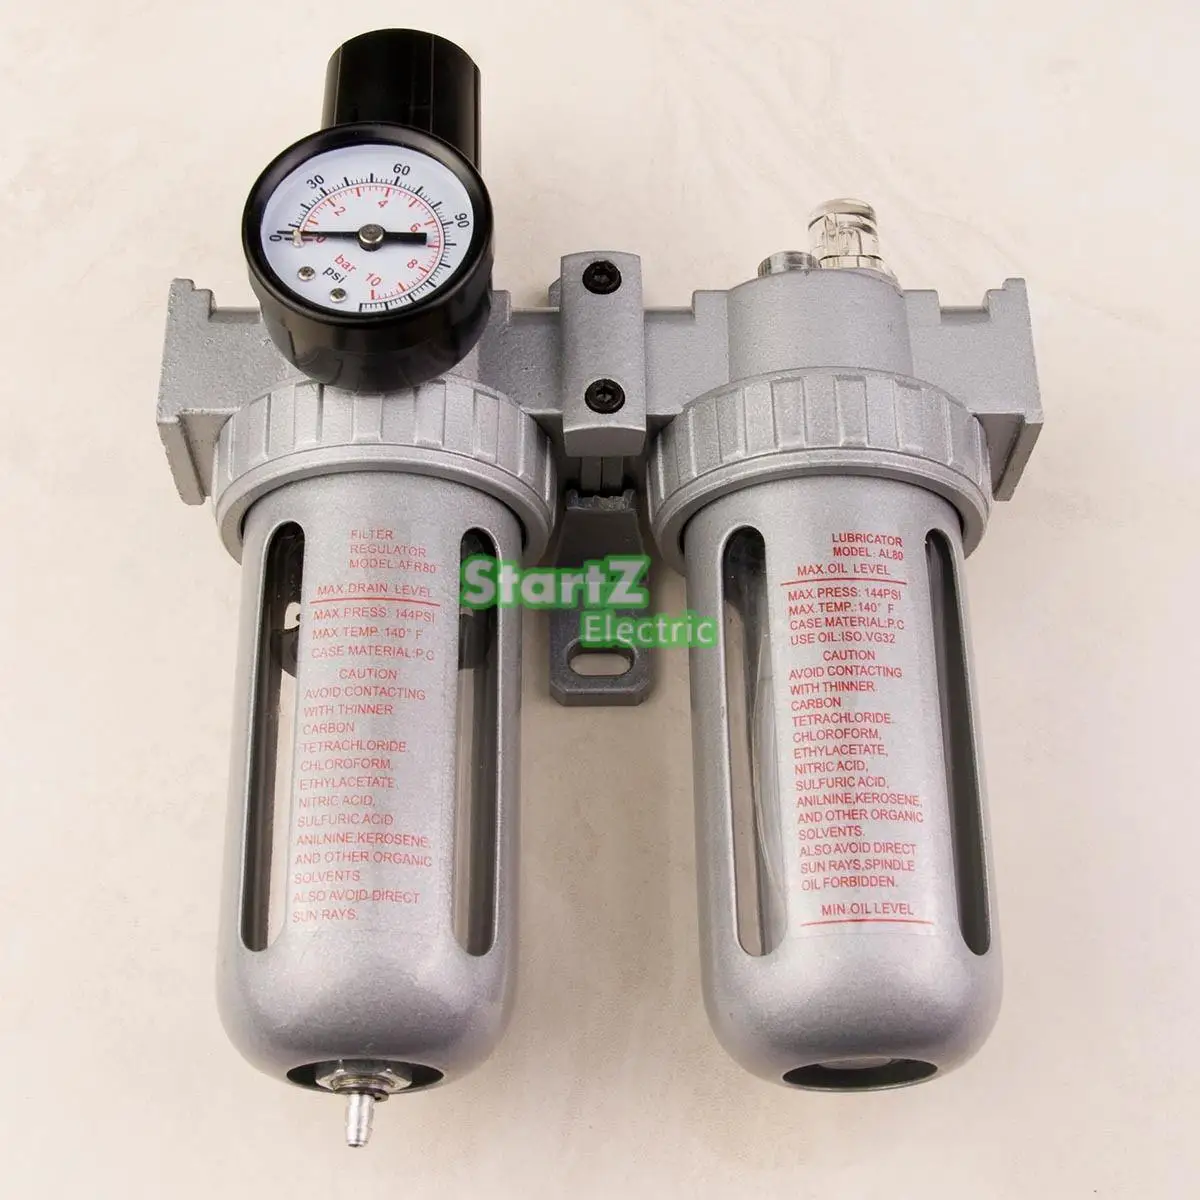 Lubricator Oiler Compressed Air Filter Moisture 1/4" Pressure Regulator 